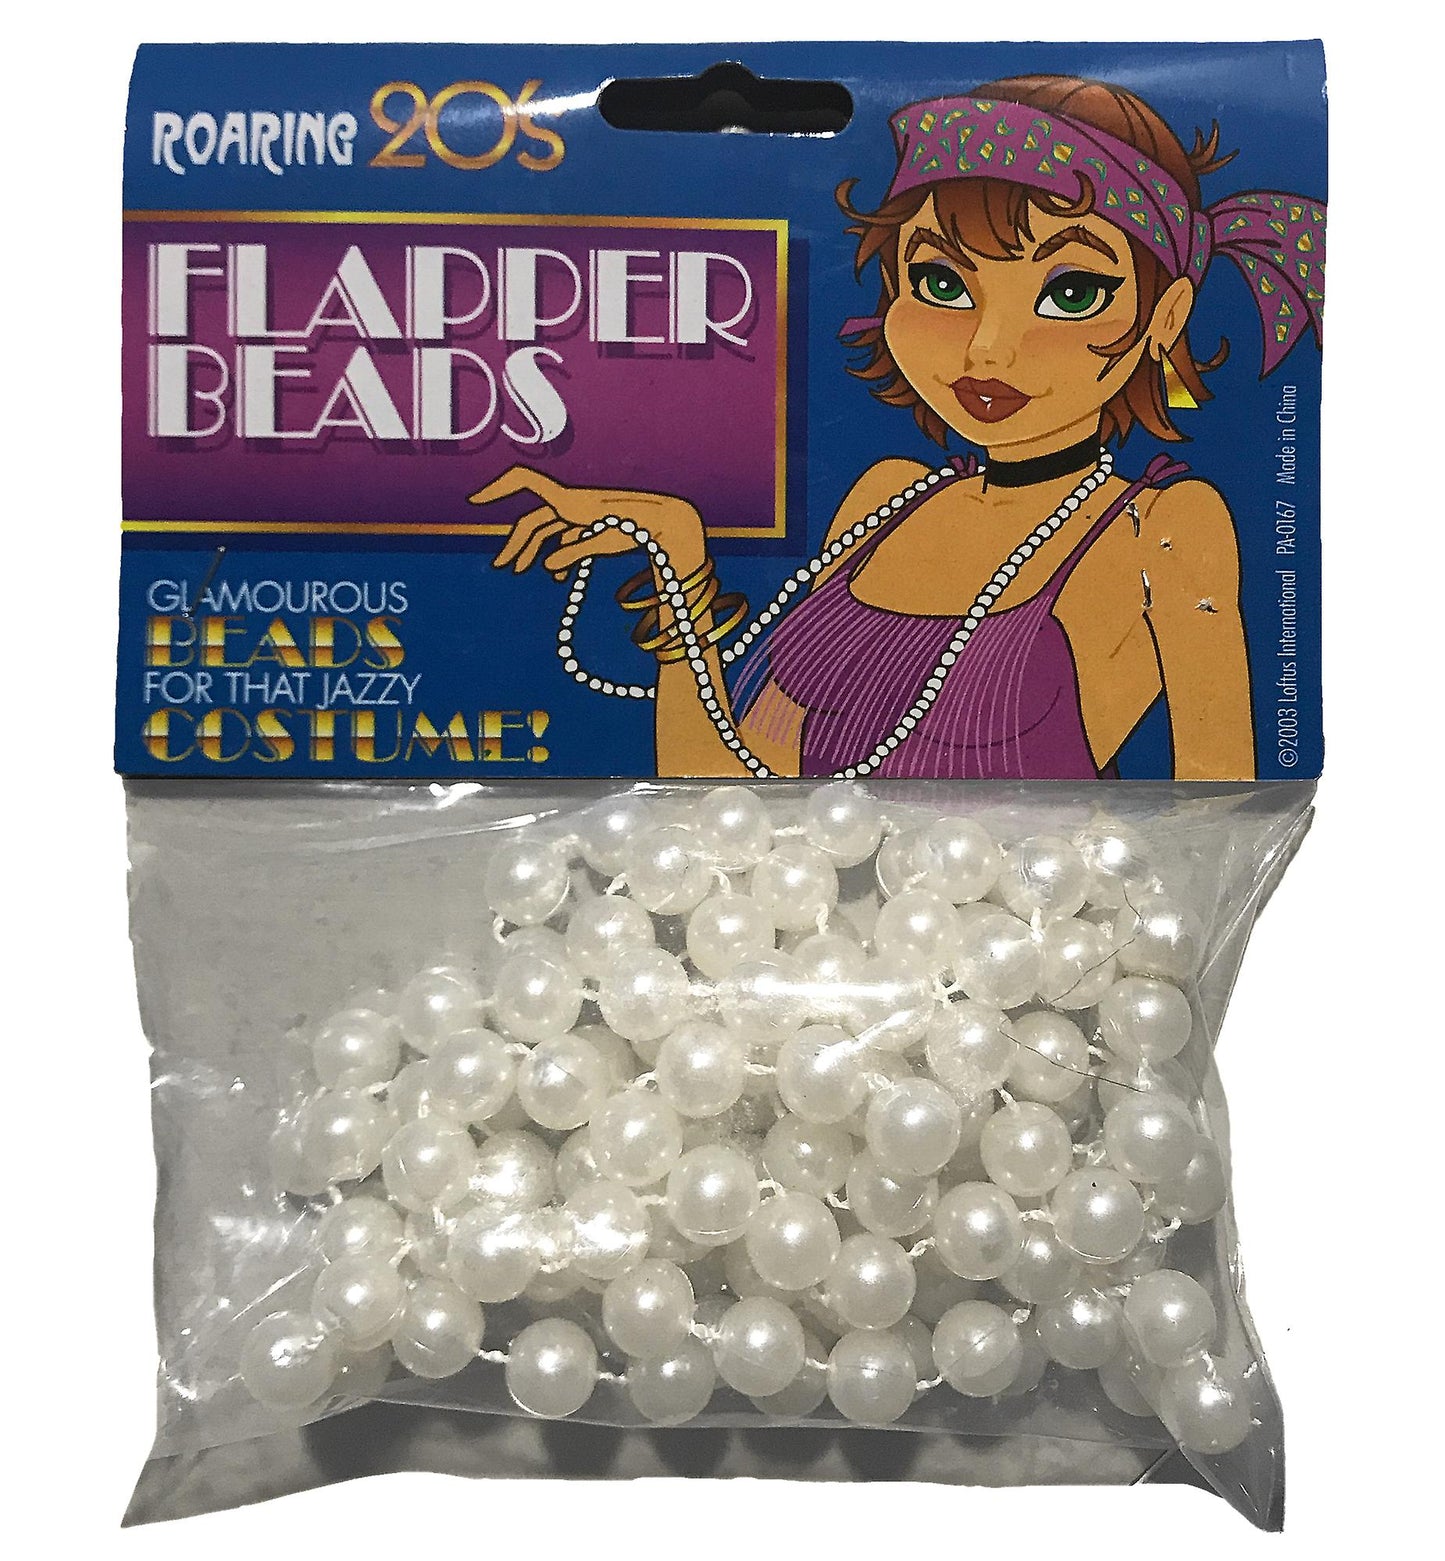 Flapper Beads